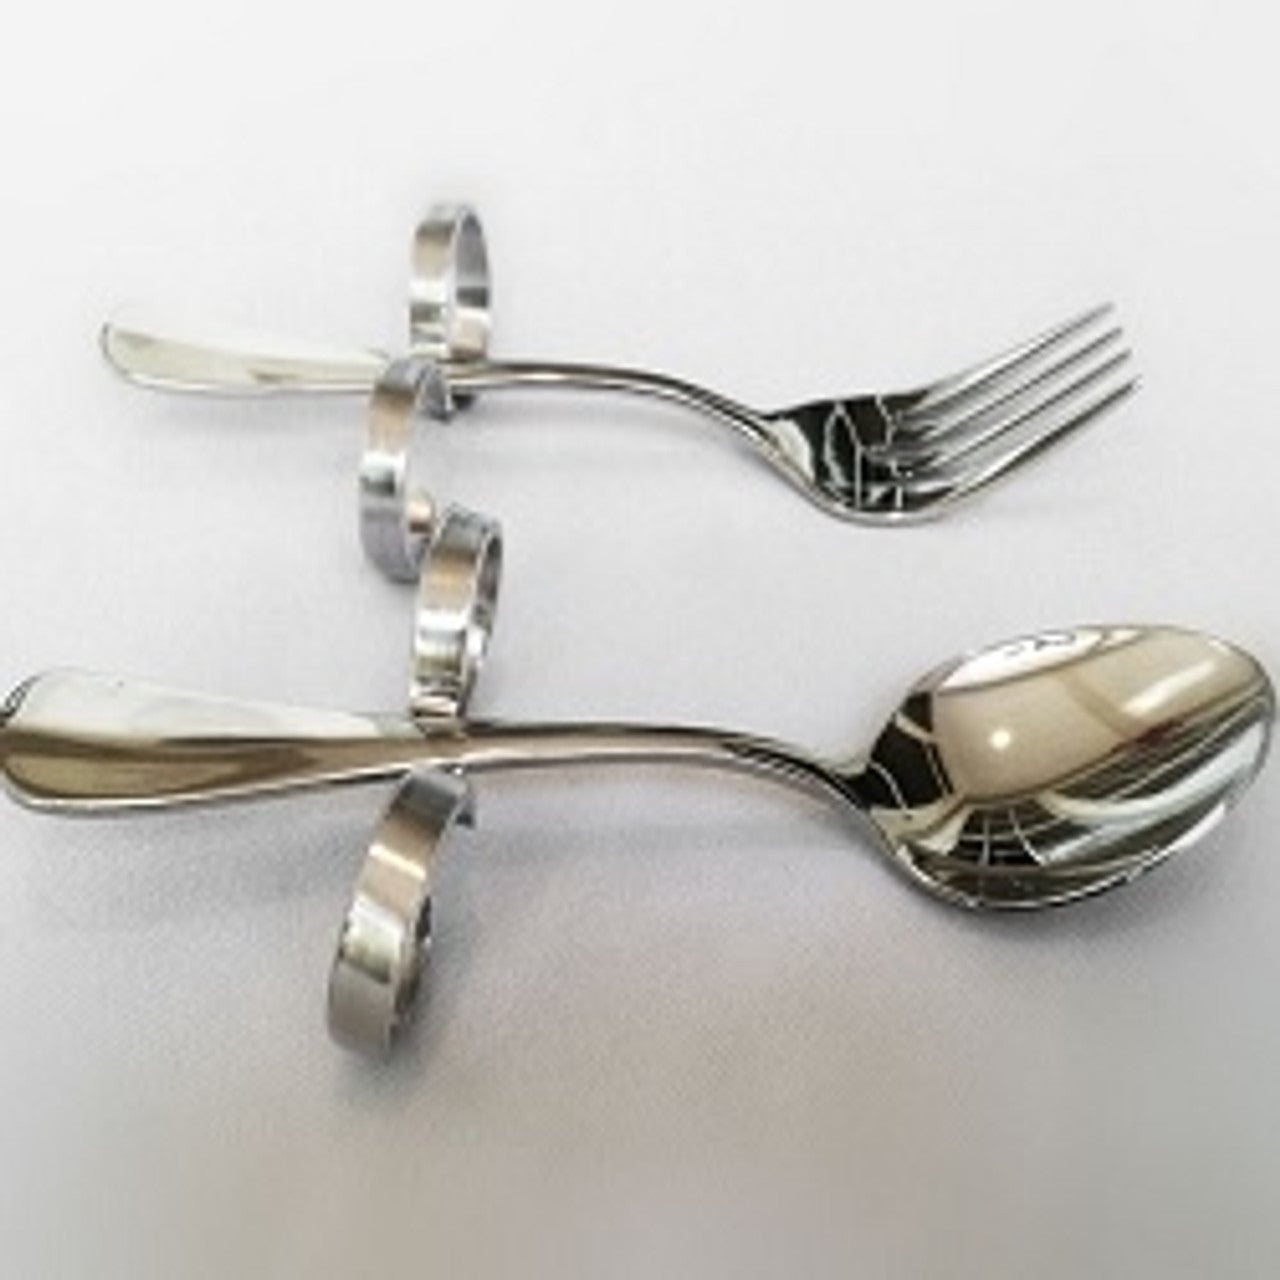 Adaptive Silverware Set, small fork, small spoon